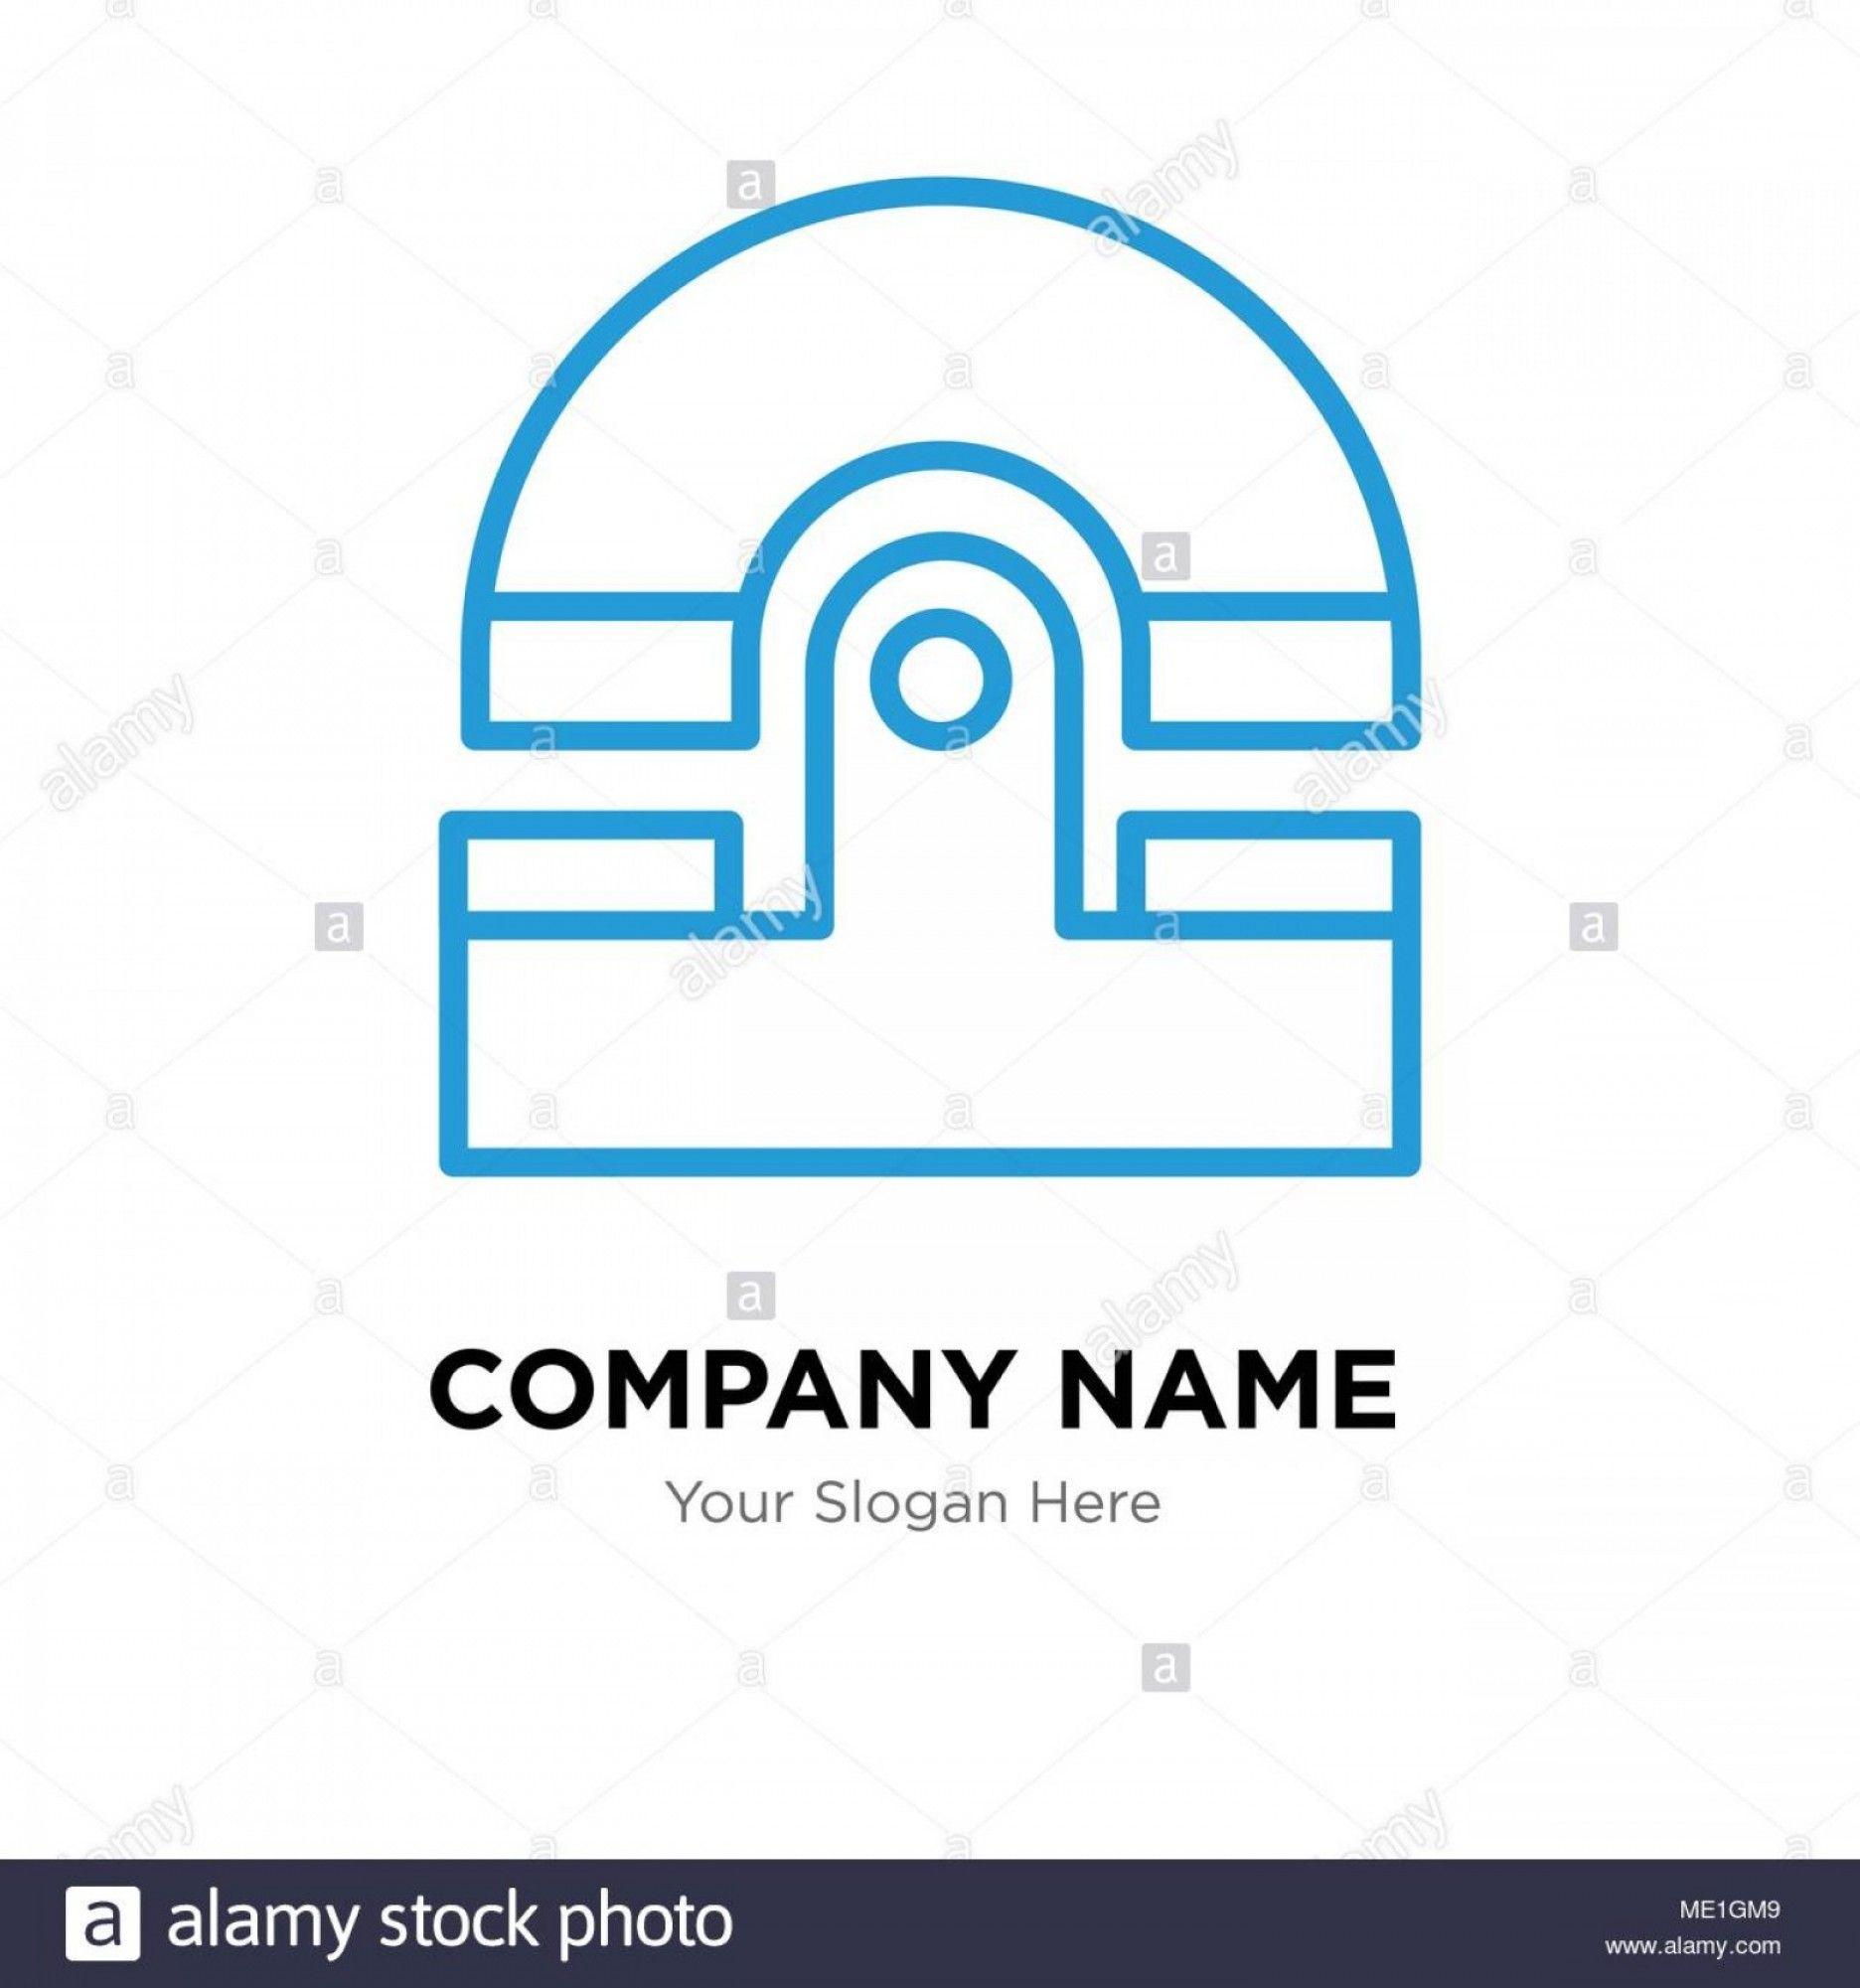 Old Motorola Logo - Old Phone Company Logo Design Template Business Corporate Vector ...